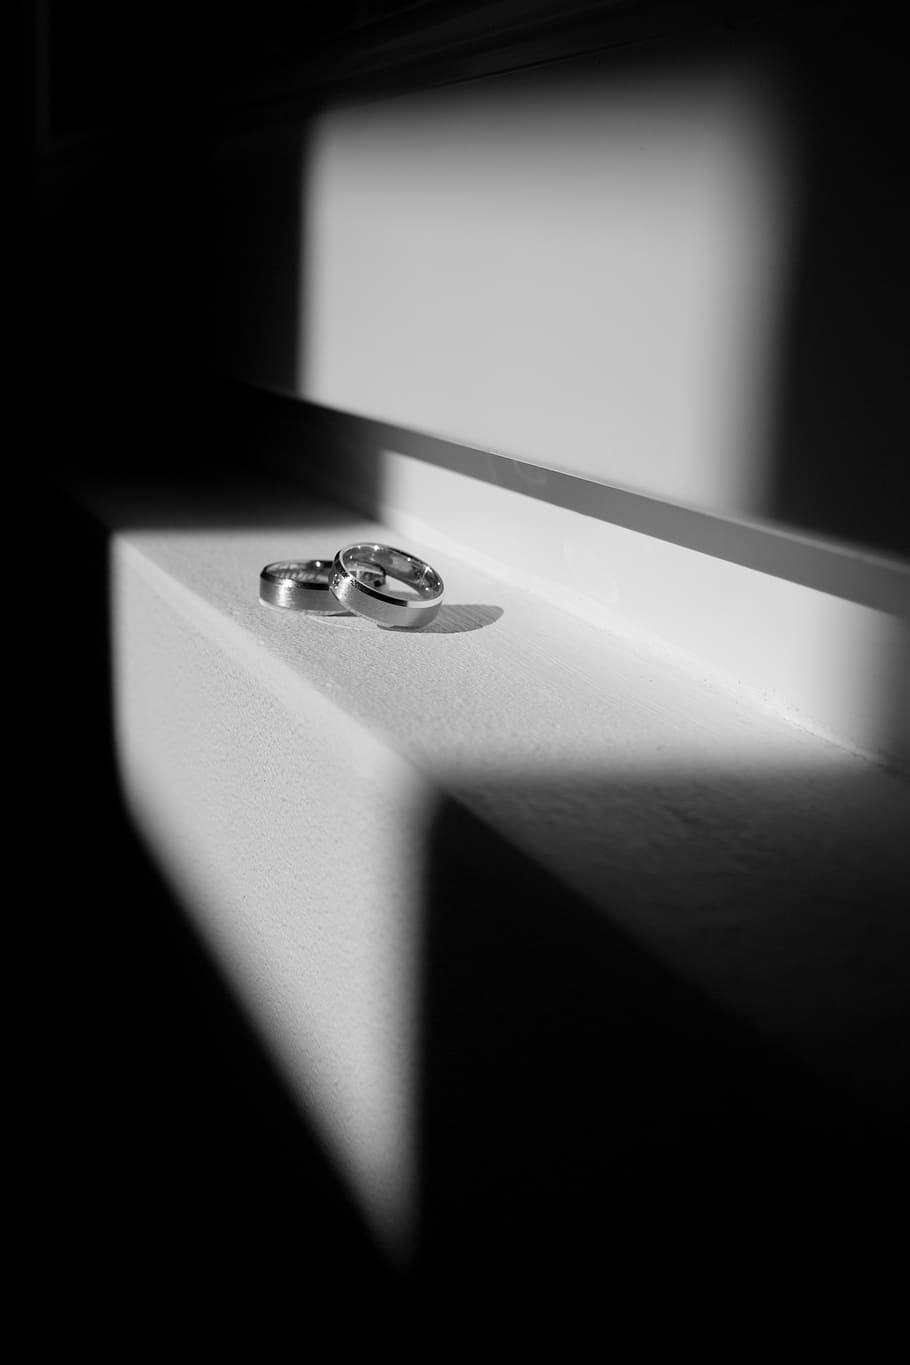 shadow, wedding, wedding ring, bride, marriage, mono, wedding rings